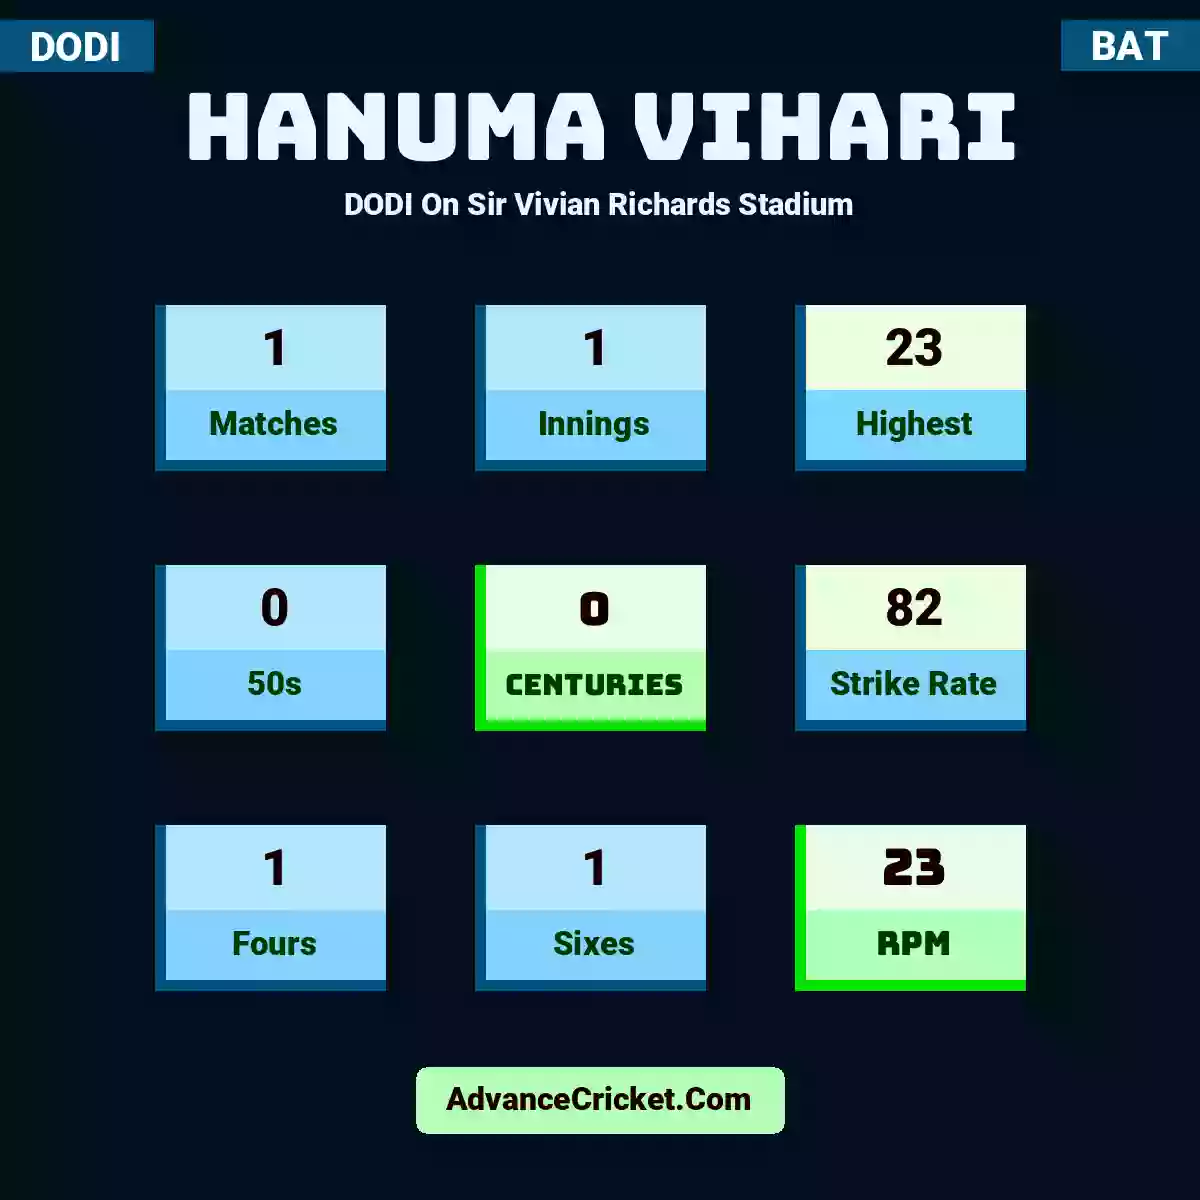 Hanuma Vihari DODI  On Sir Vivian Richards Stadium, Hanuma Vihari played 1 matches, scored 23 runs as highest, 0 half-centuries, and 0 centuries, with a strike rate of 82. H.Vihari hit 1 fours and 1 sixes, with an RPM of 23.